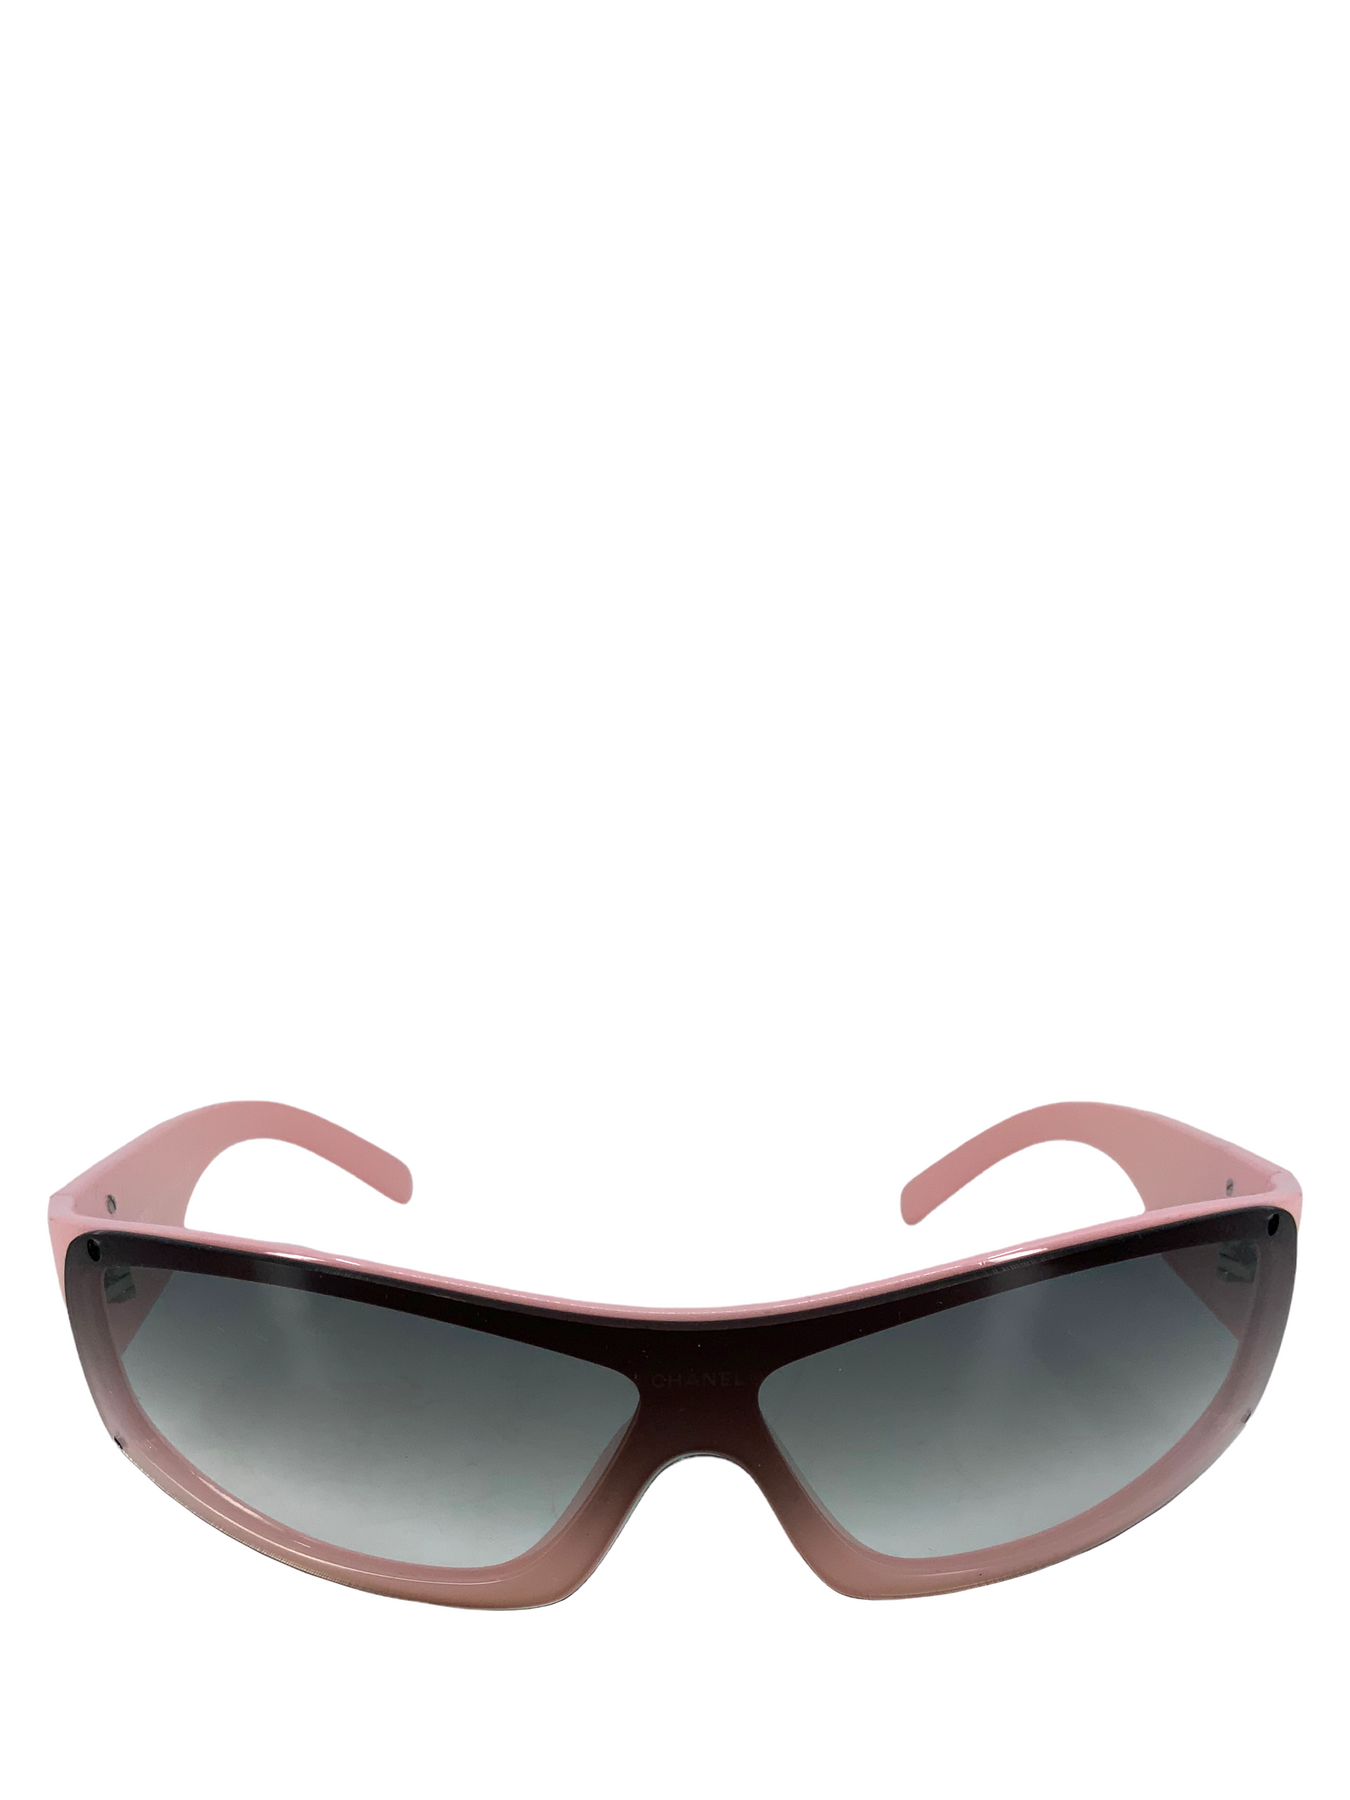 Chanel 5072 Square Frame Sunglasses